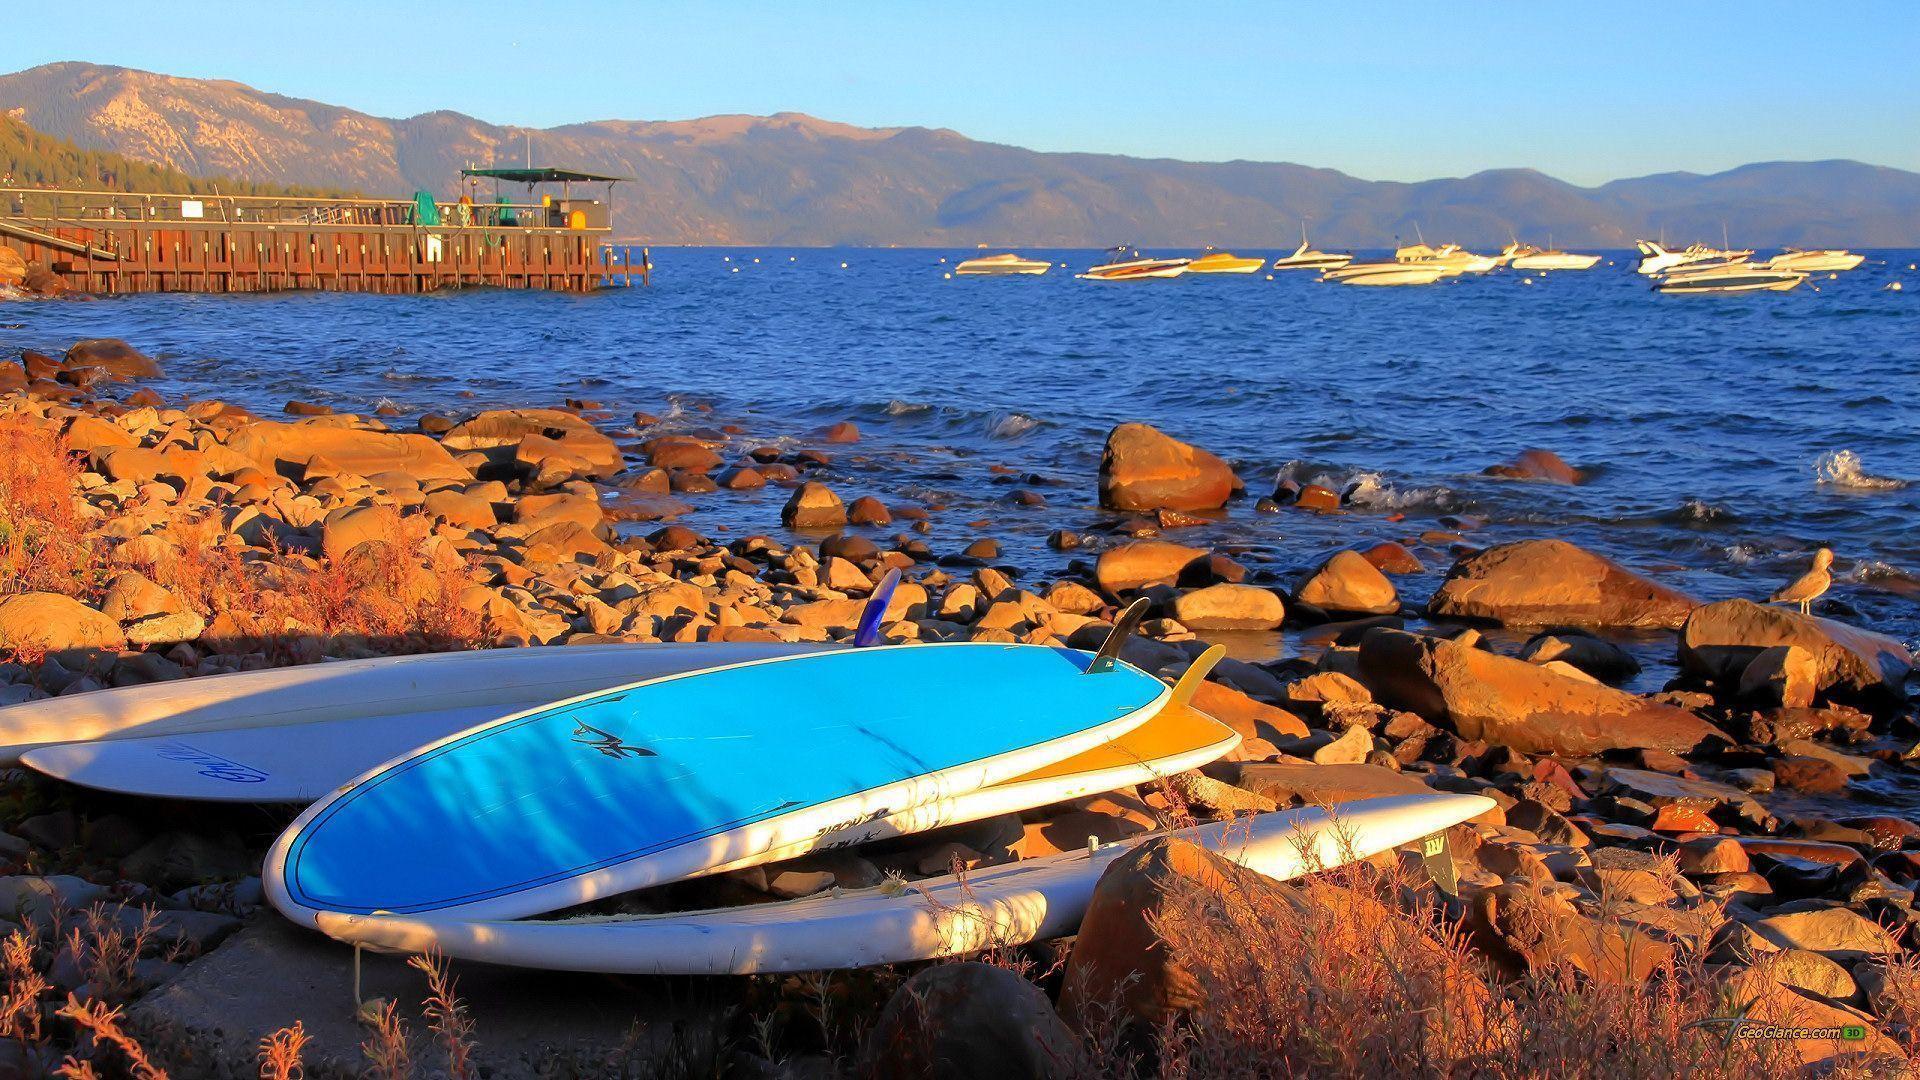 Surfboard Desktop Wallpapers Top Free Surfboard Desktop Backgrounds